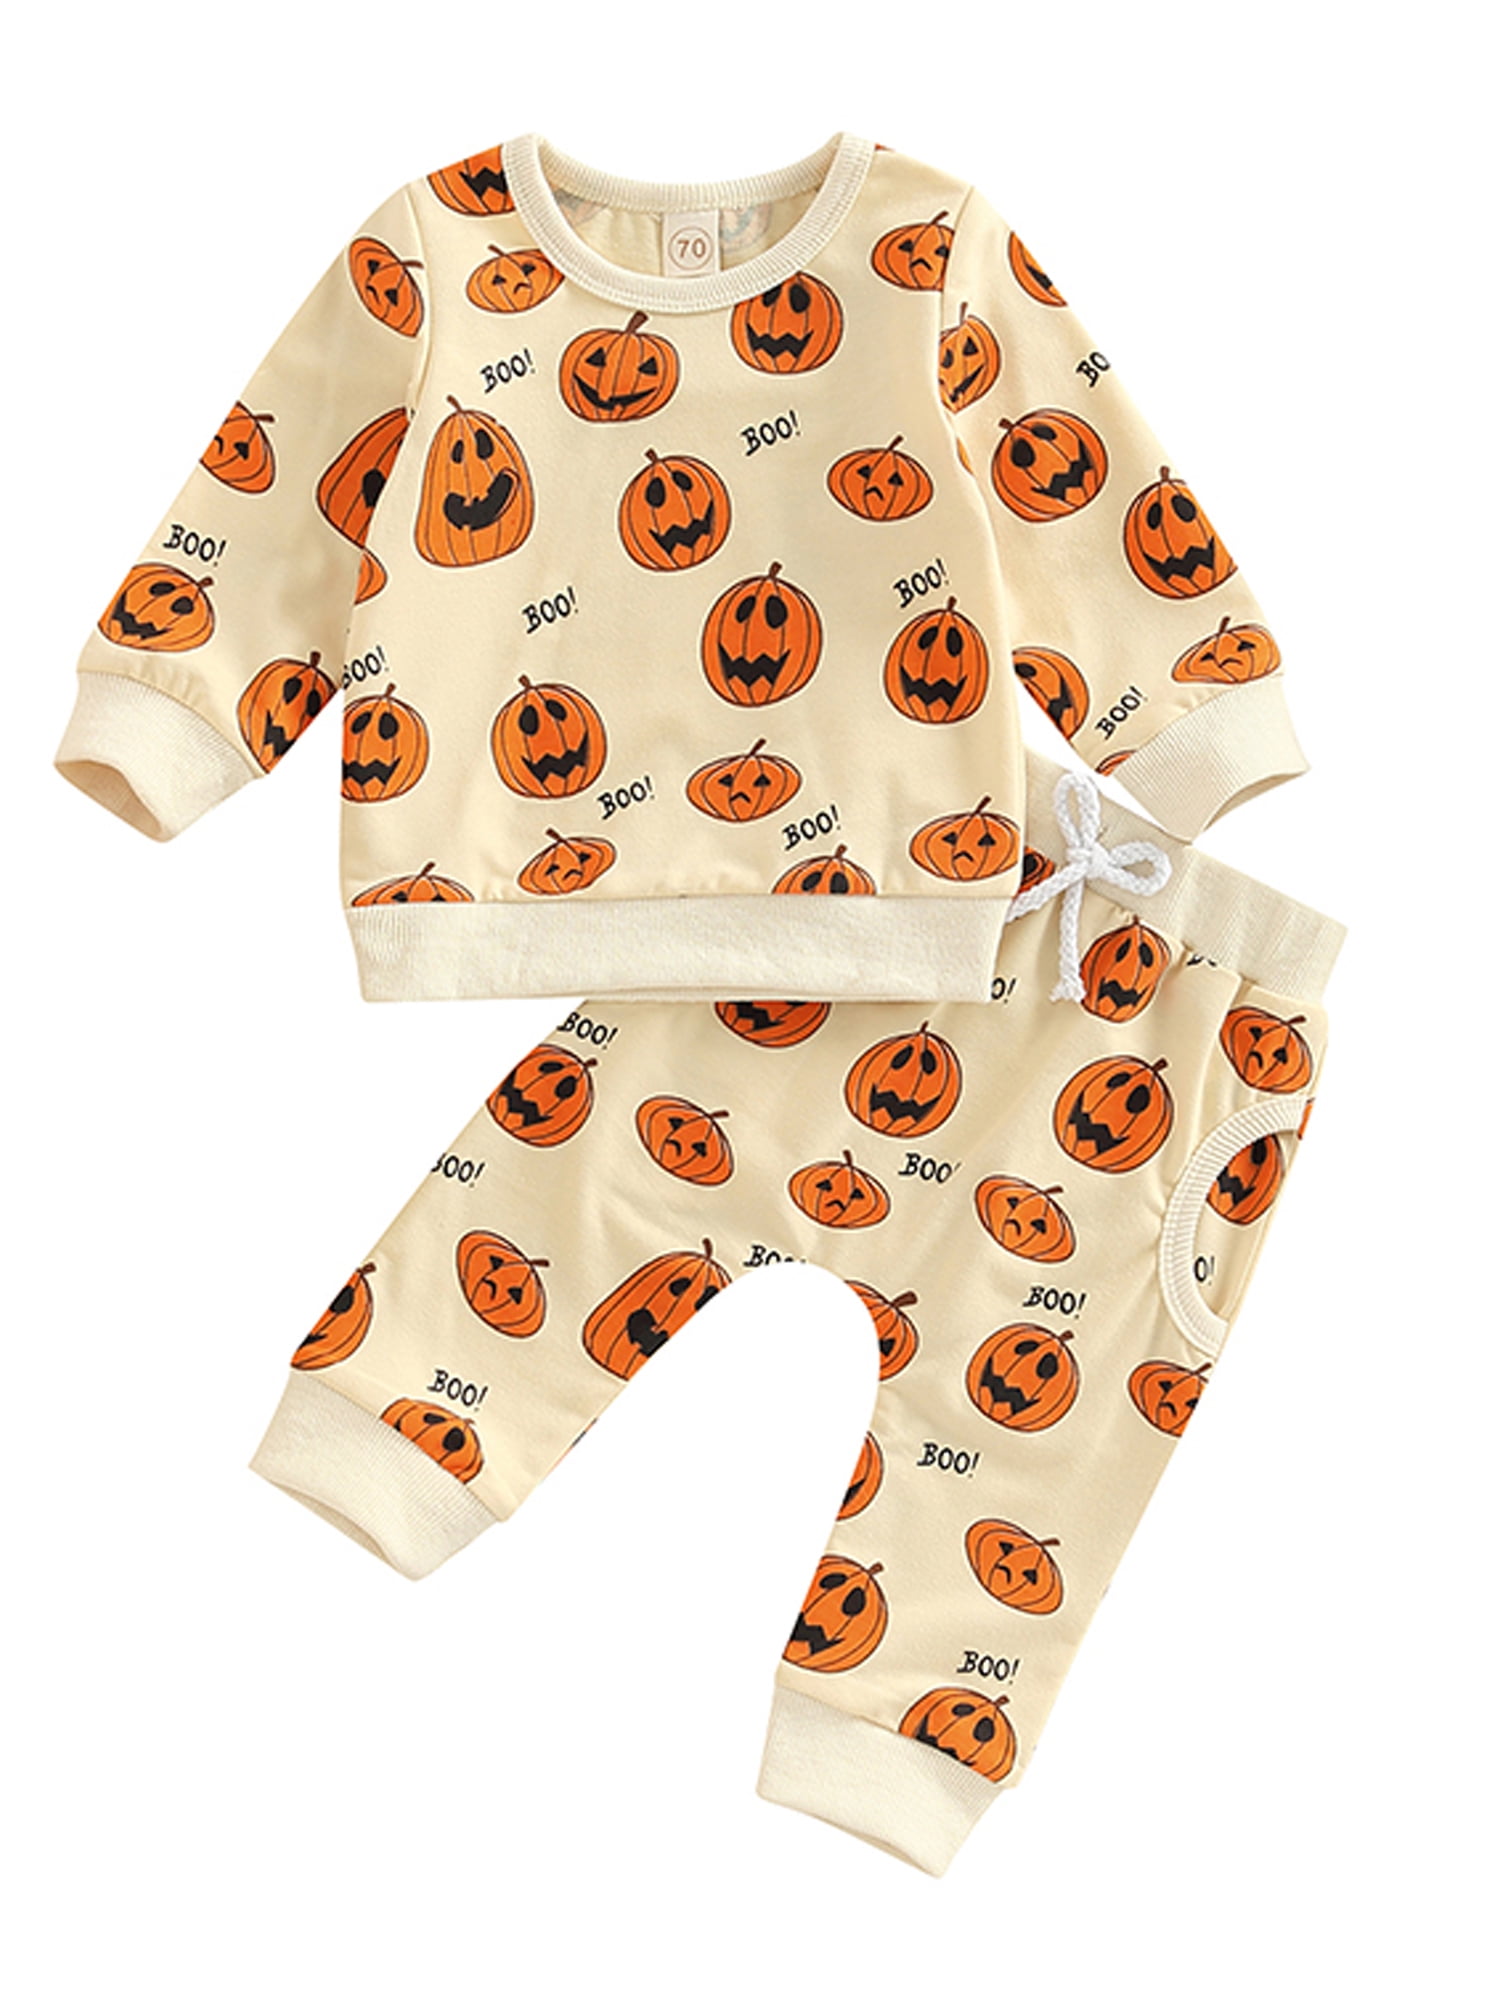 Toddler Kids Boys Girls Halloween sweatshirt Halloween outfit Clothing Unisex Kids Clothing Jumpers Hand Picked Pumpkin Sweater 